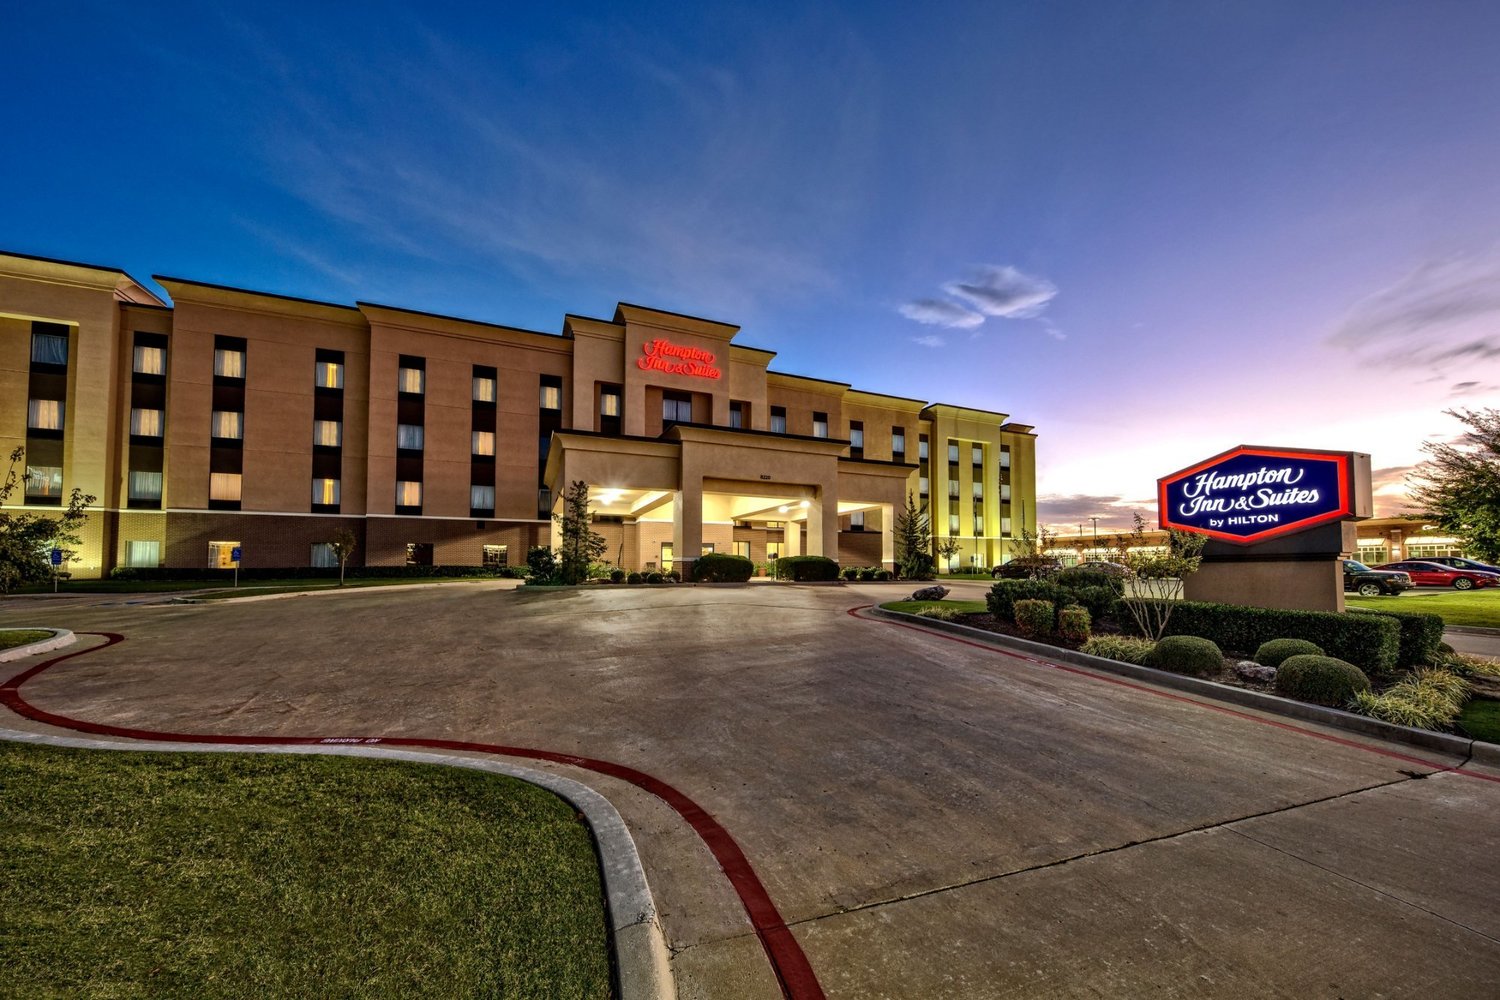 Hampton Inn & Suites Tulsa South-Bixby, Tulsa, OK Jobs ...